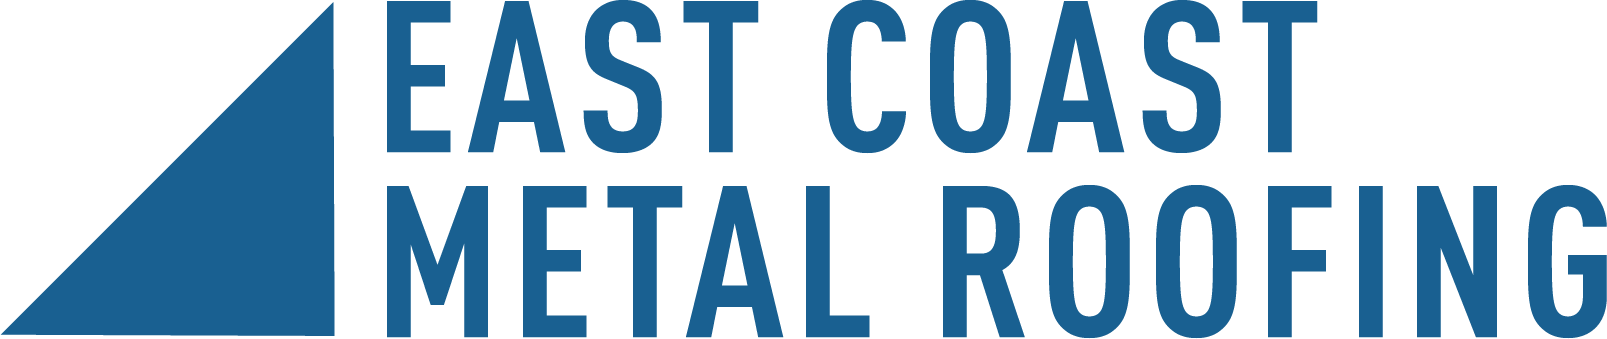 East Coast Metal Roofing, LLC - New Hampshire Logo